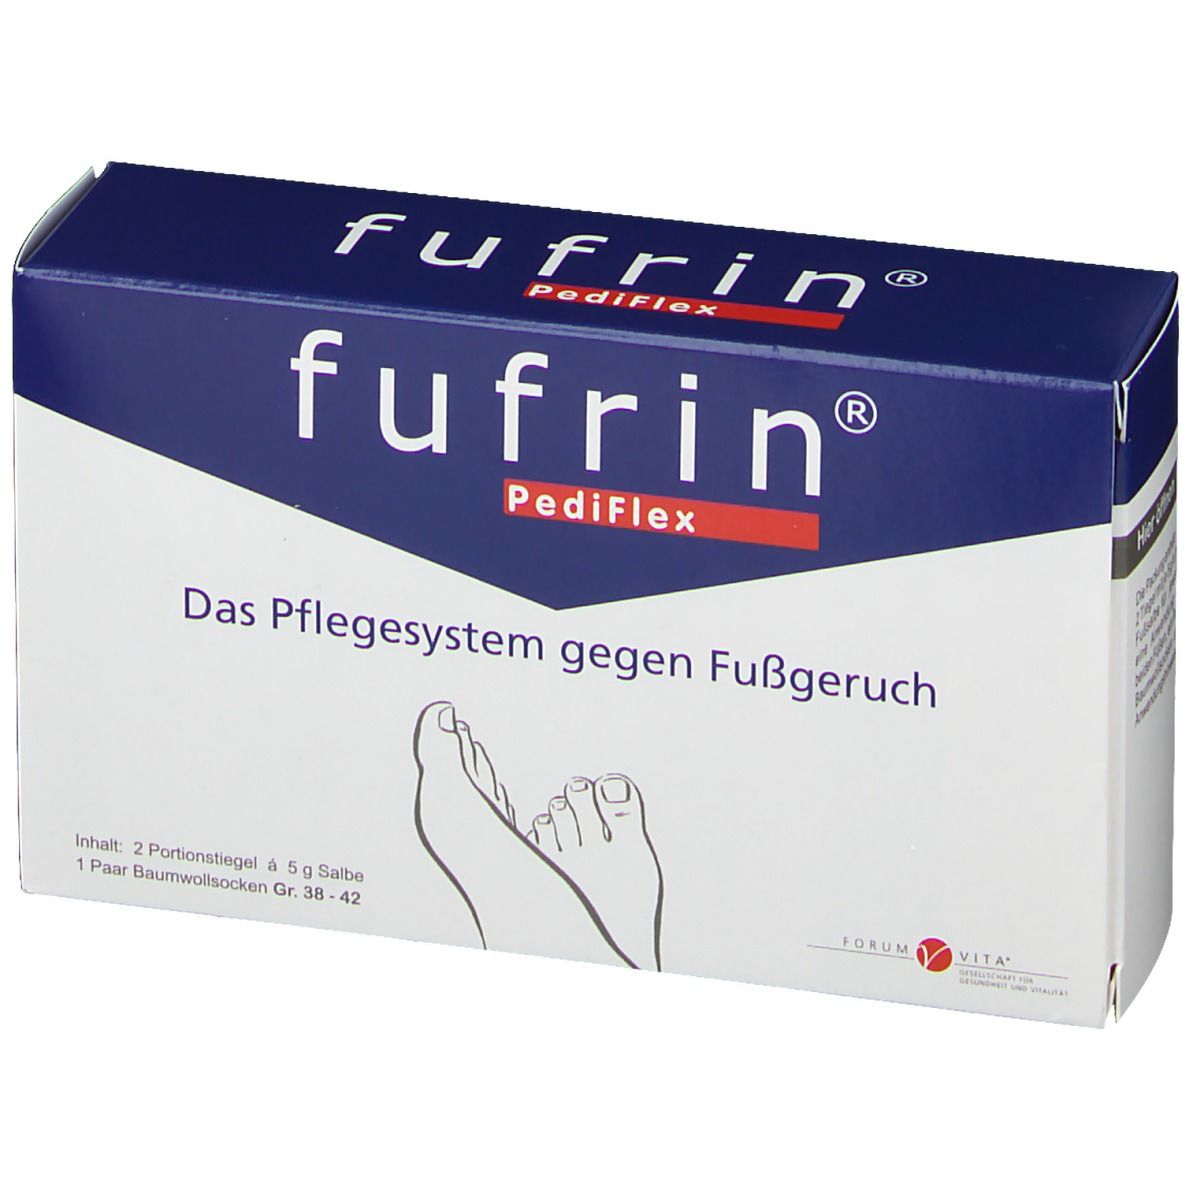 fufrin® PediFlex Fusspflegesystem Gr. 38-42